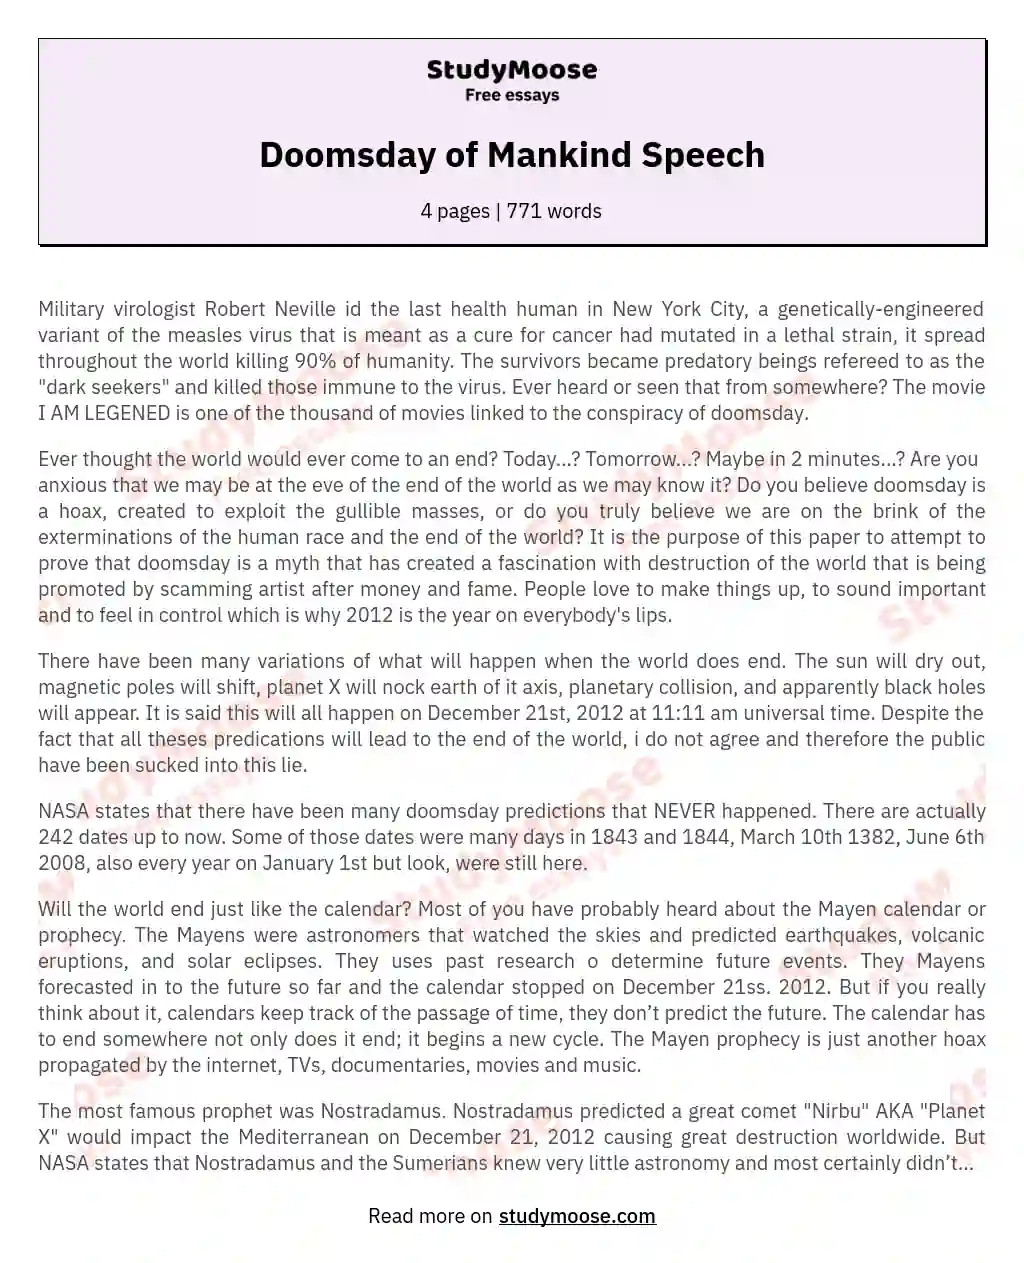 Doomsday of Mankind Speech essay